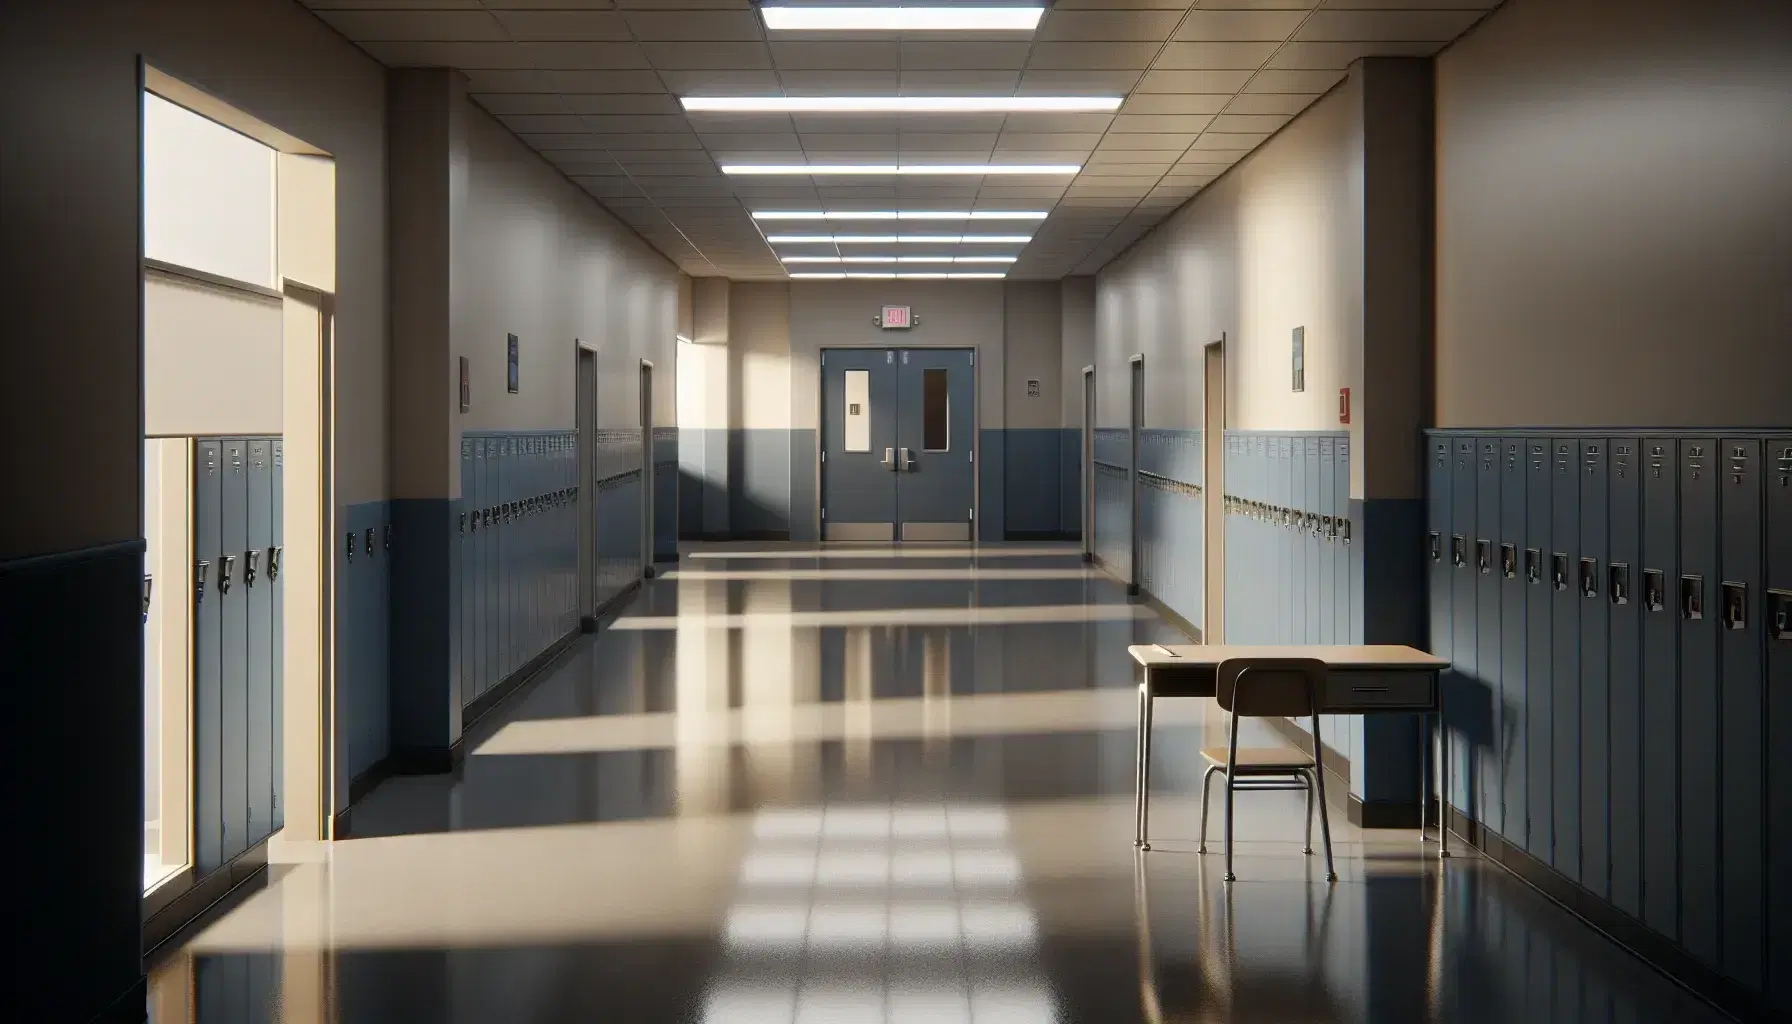 Empty school corridor with beige walls, shiny gray floor, closed blue lockers and unmarked classroom doors, wooden desk and chair.